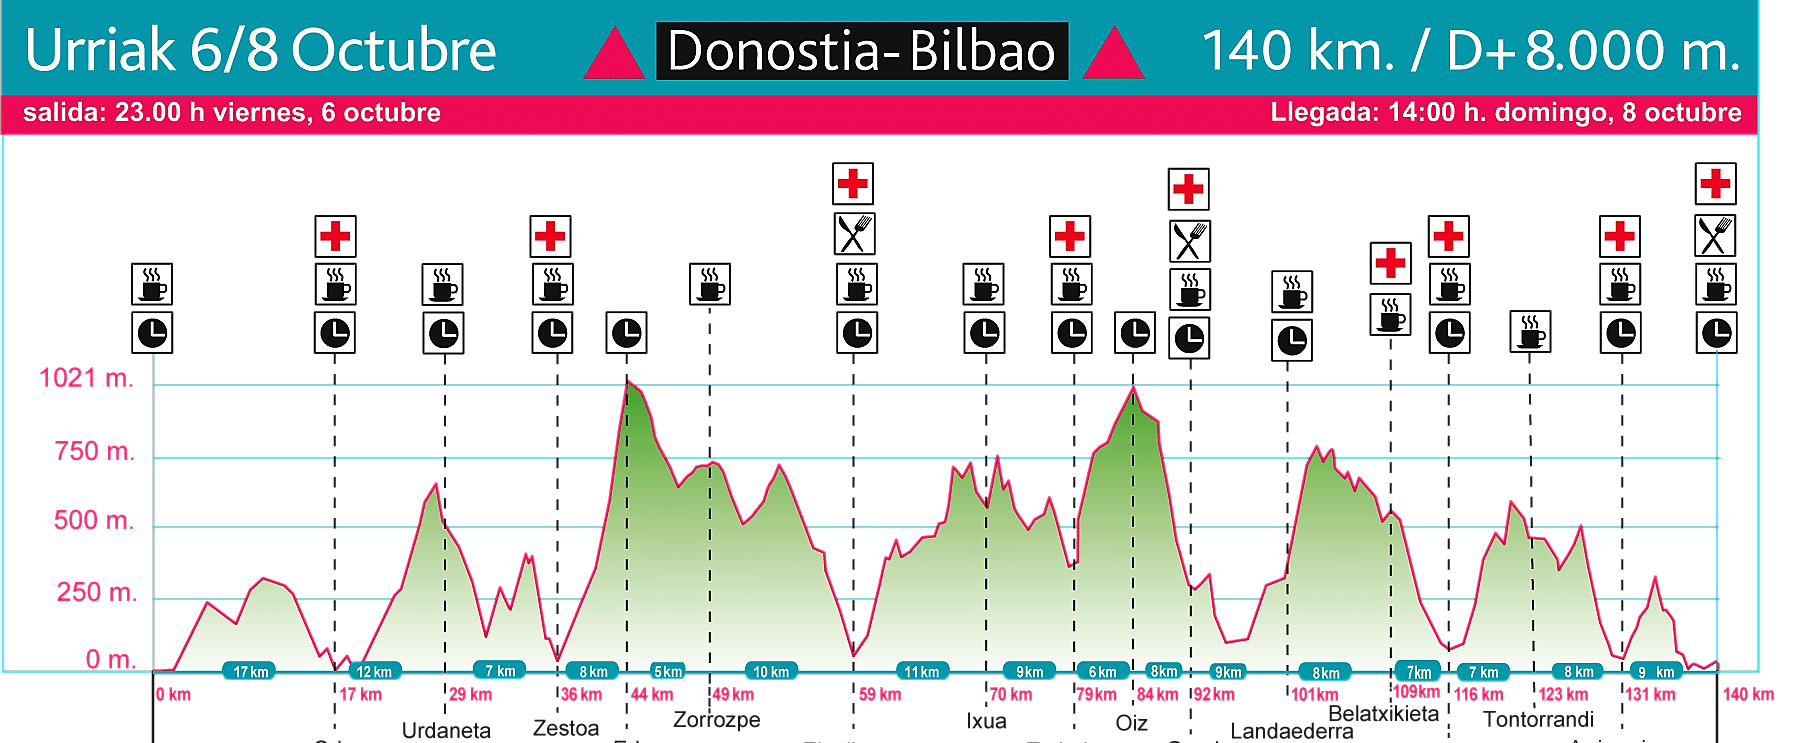 La Bilbao-Donostia